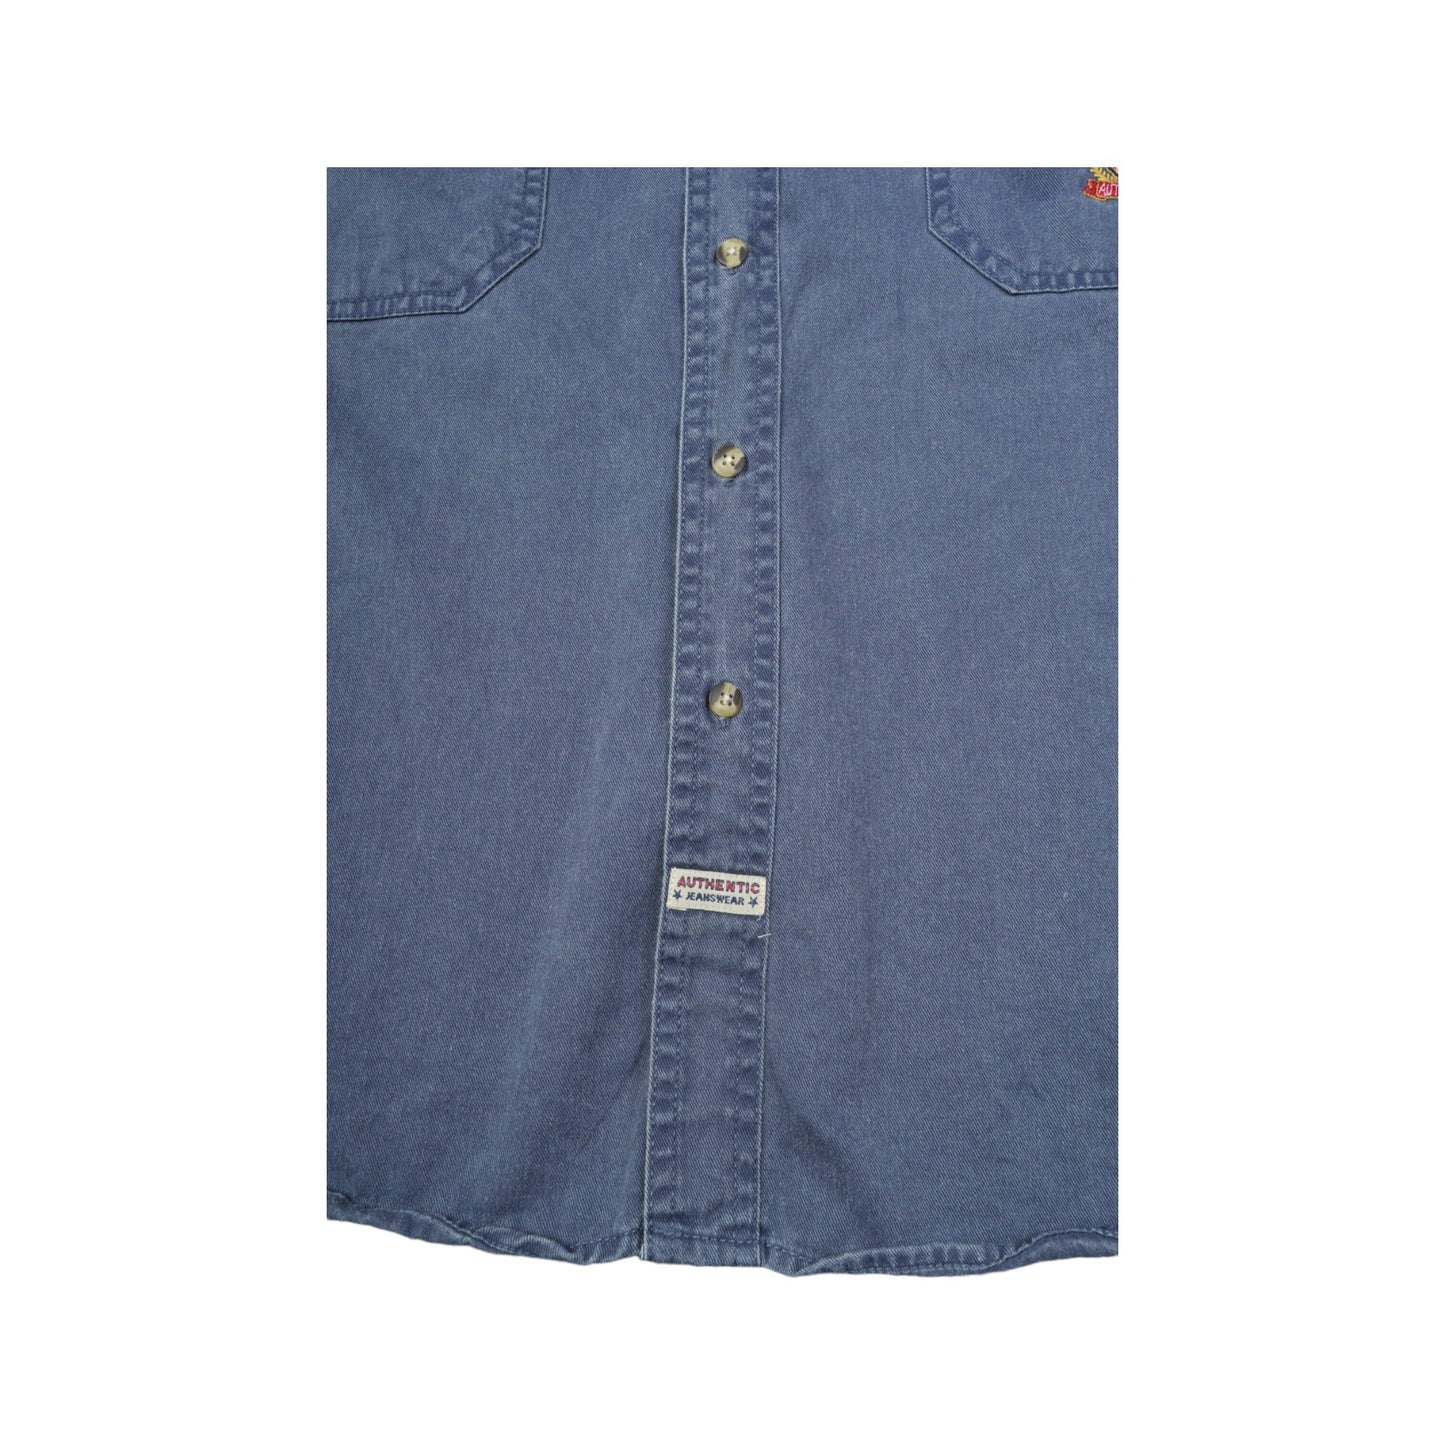 Vintage Shirt Short Sleeve Blue Large